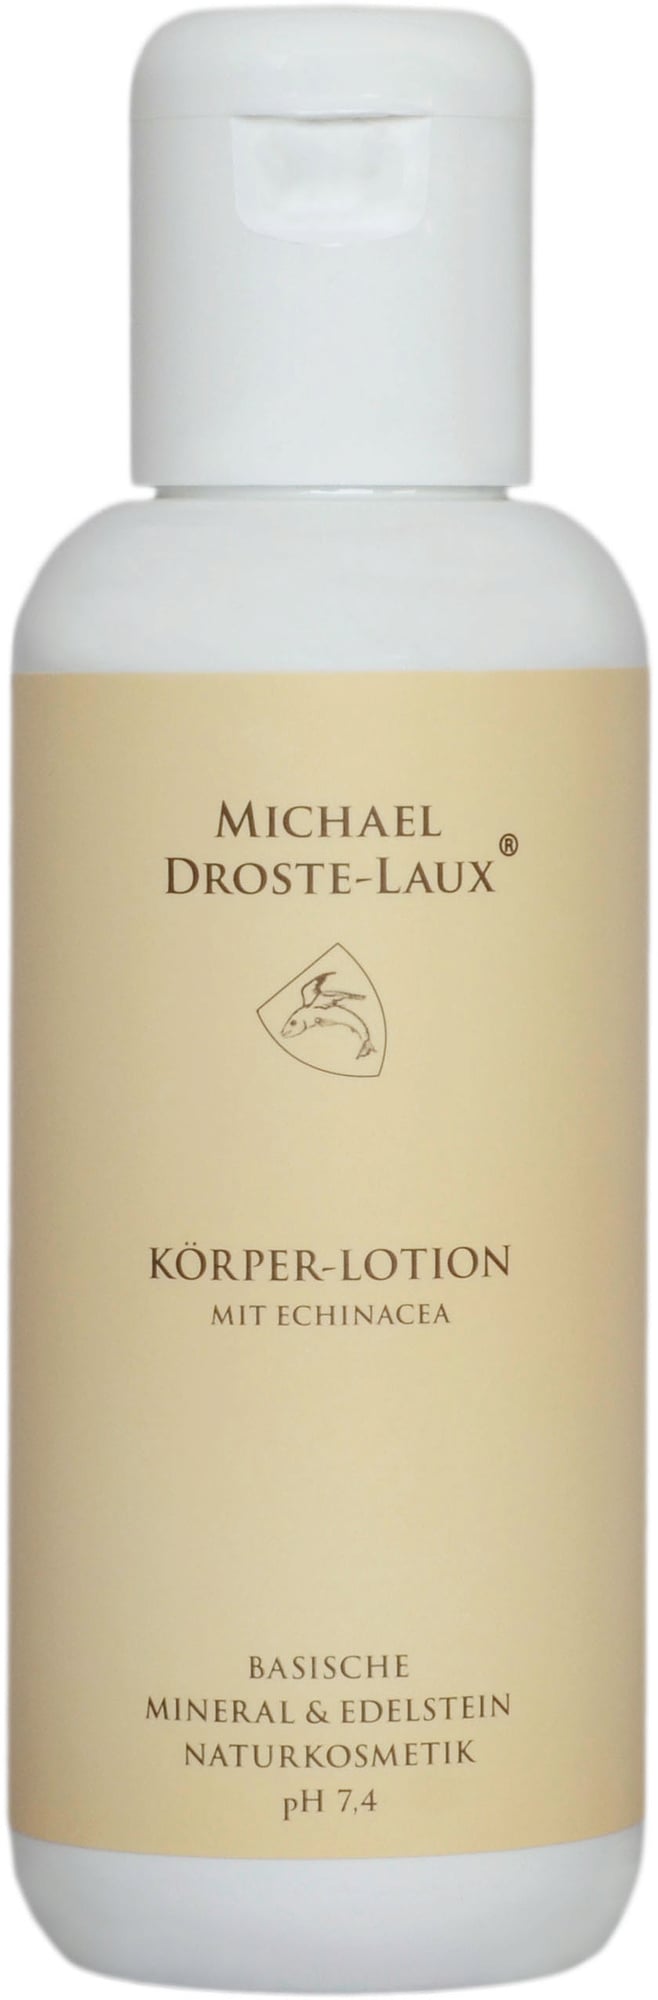 Michael Droste-Laux Alkaline Body Lotion